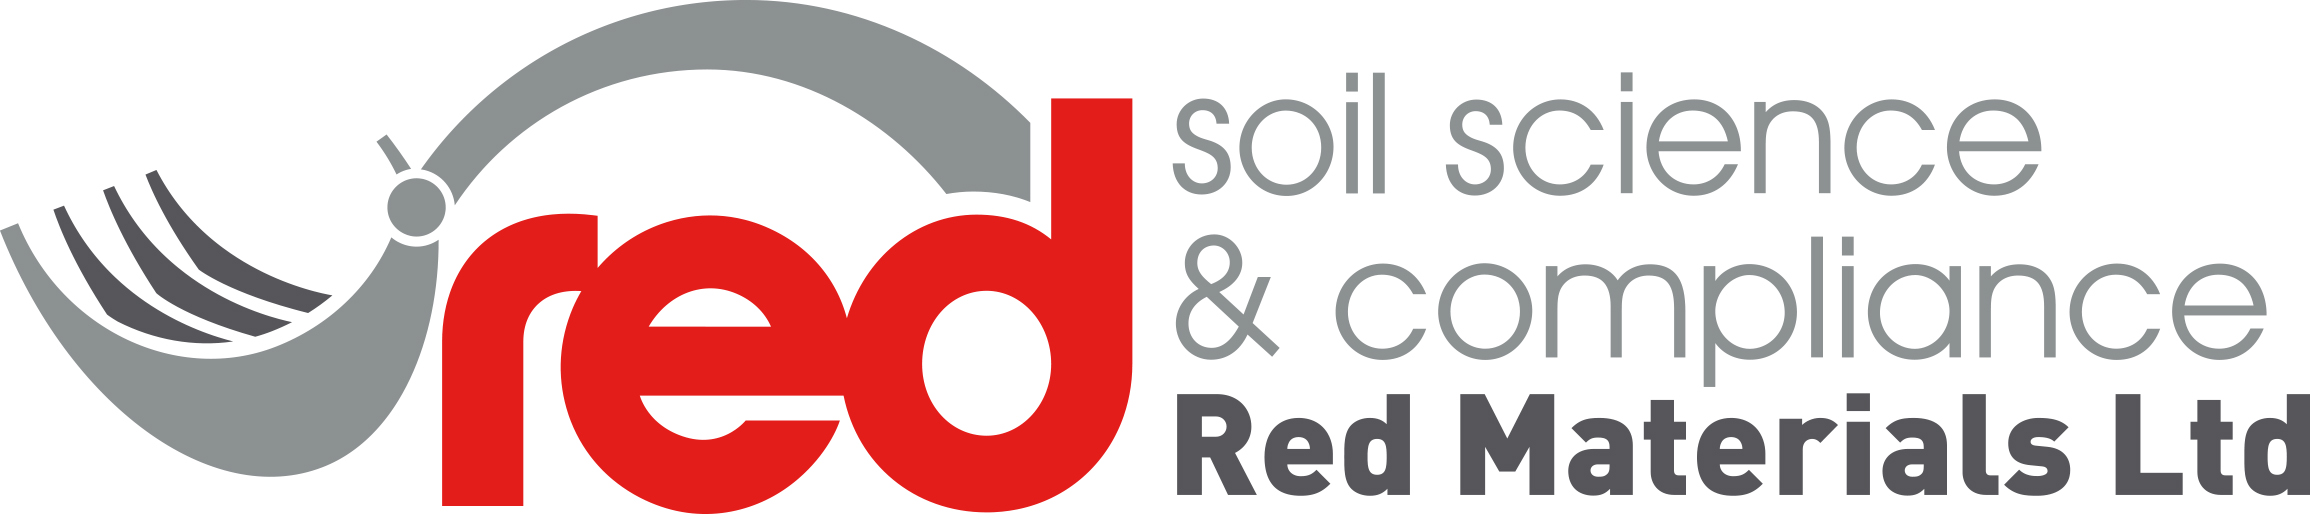 Red Main Logo (landscape format).jpg